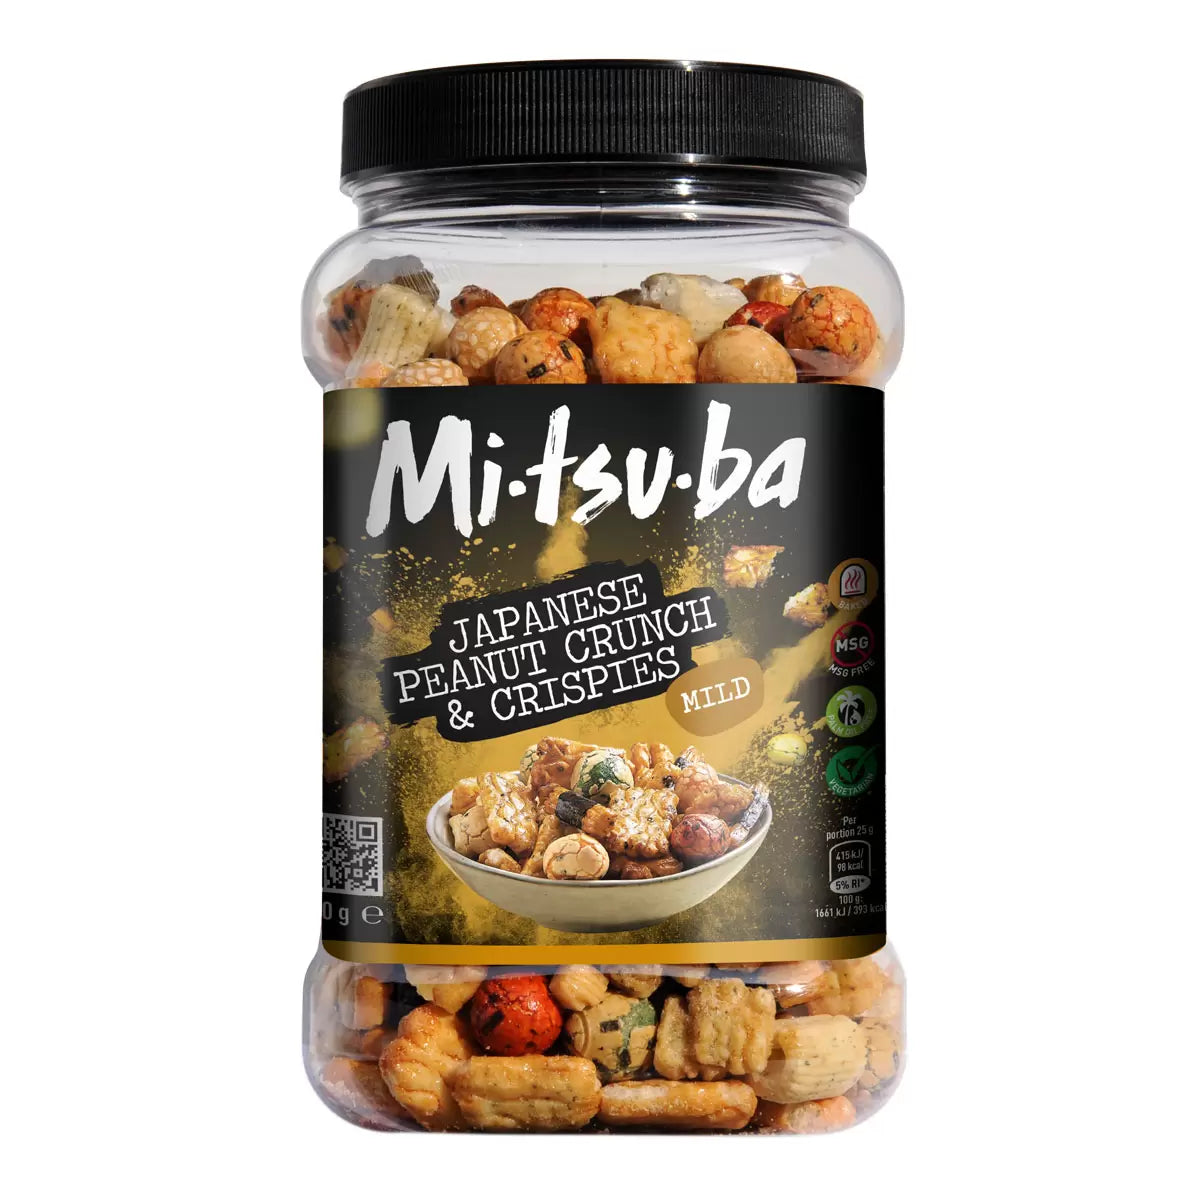 Mitsuba Japanese Peanut Crunch and Crispies - 650g